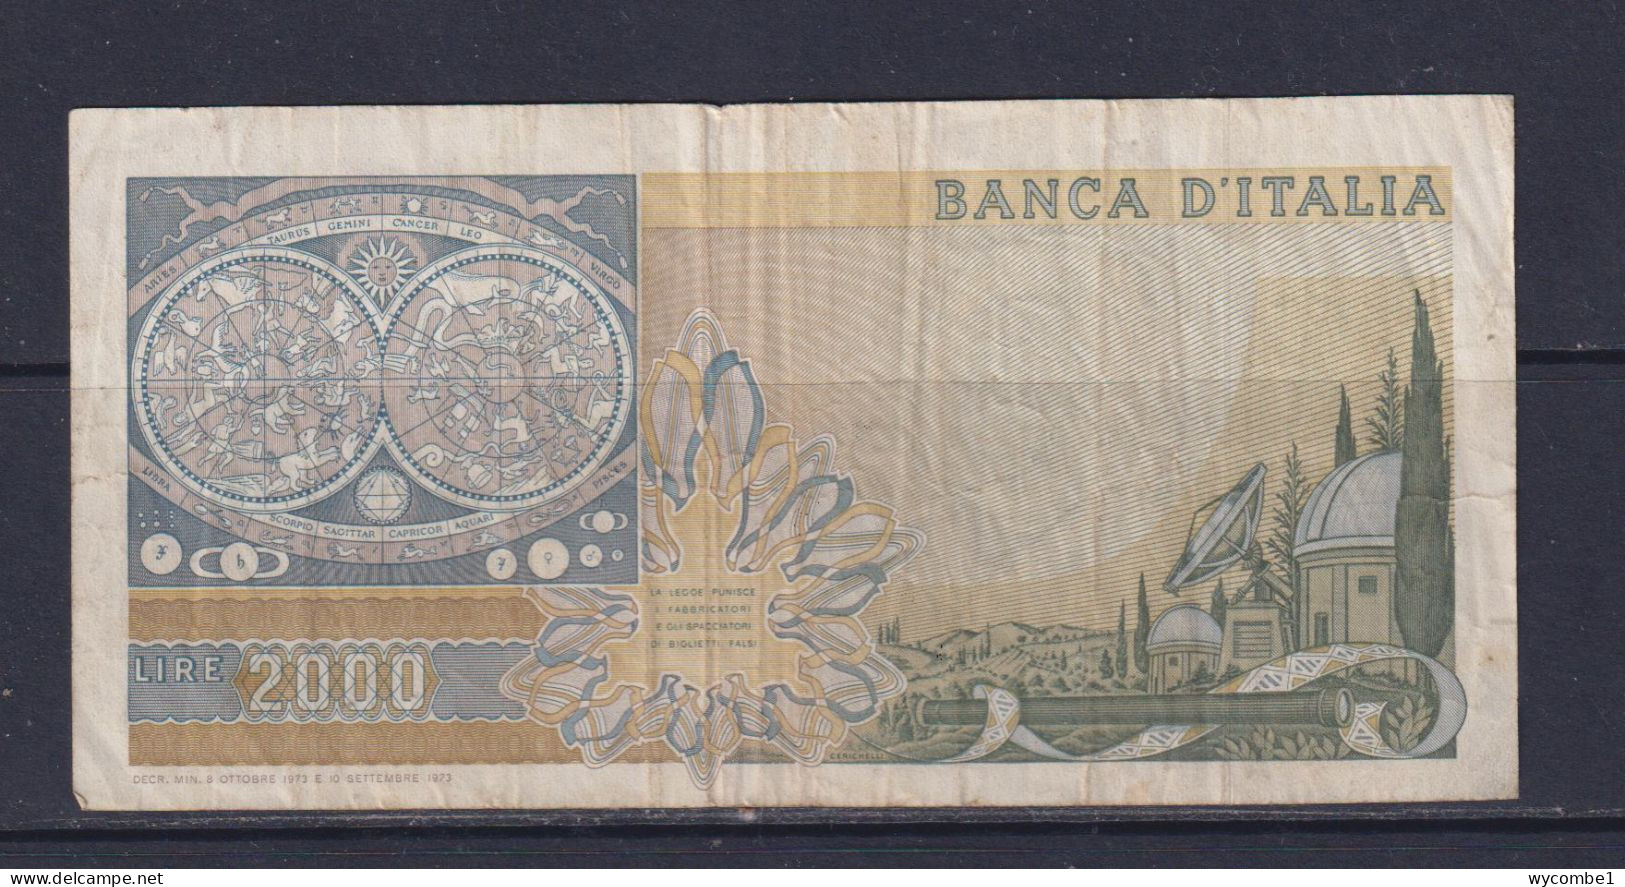 ITALY - 1983 2000 Lira Circulated Banknote - 2000 Liras